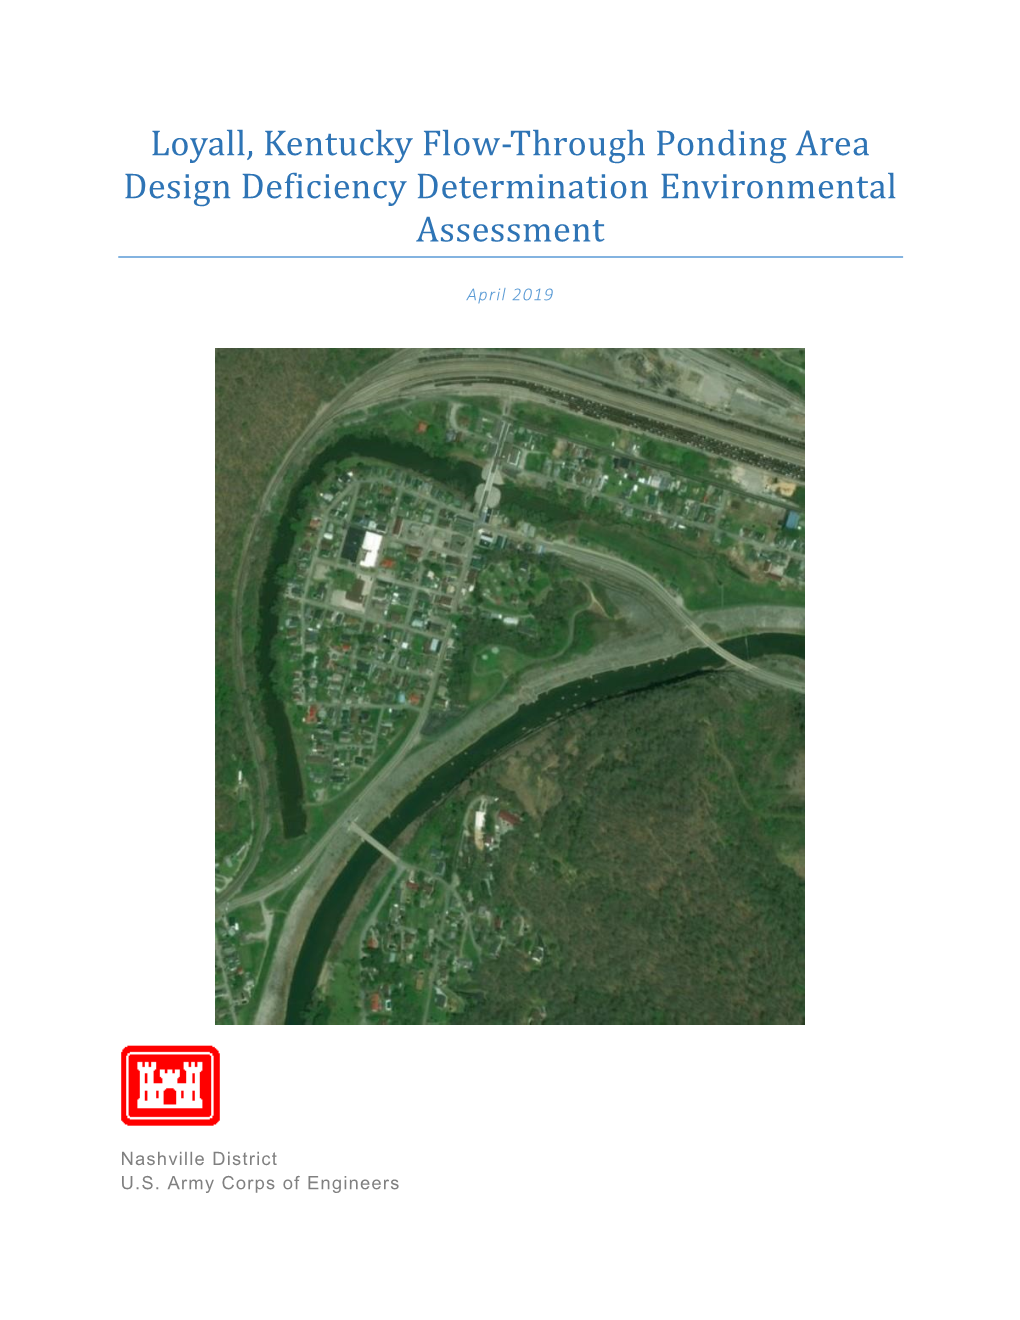 Loyall Flow Through Ponding Area Design Deficiency Environmental